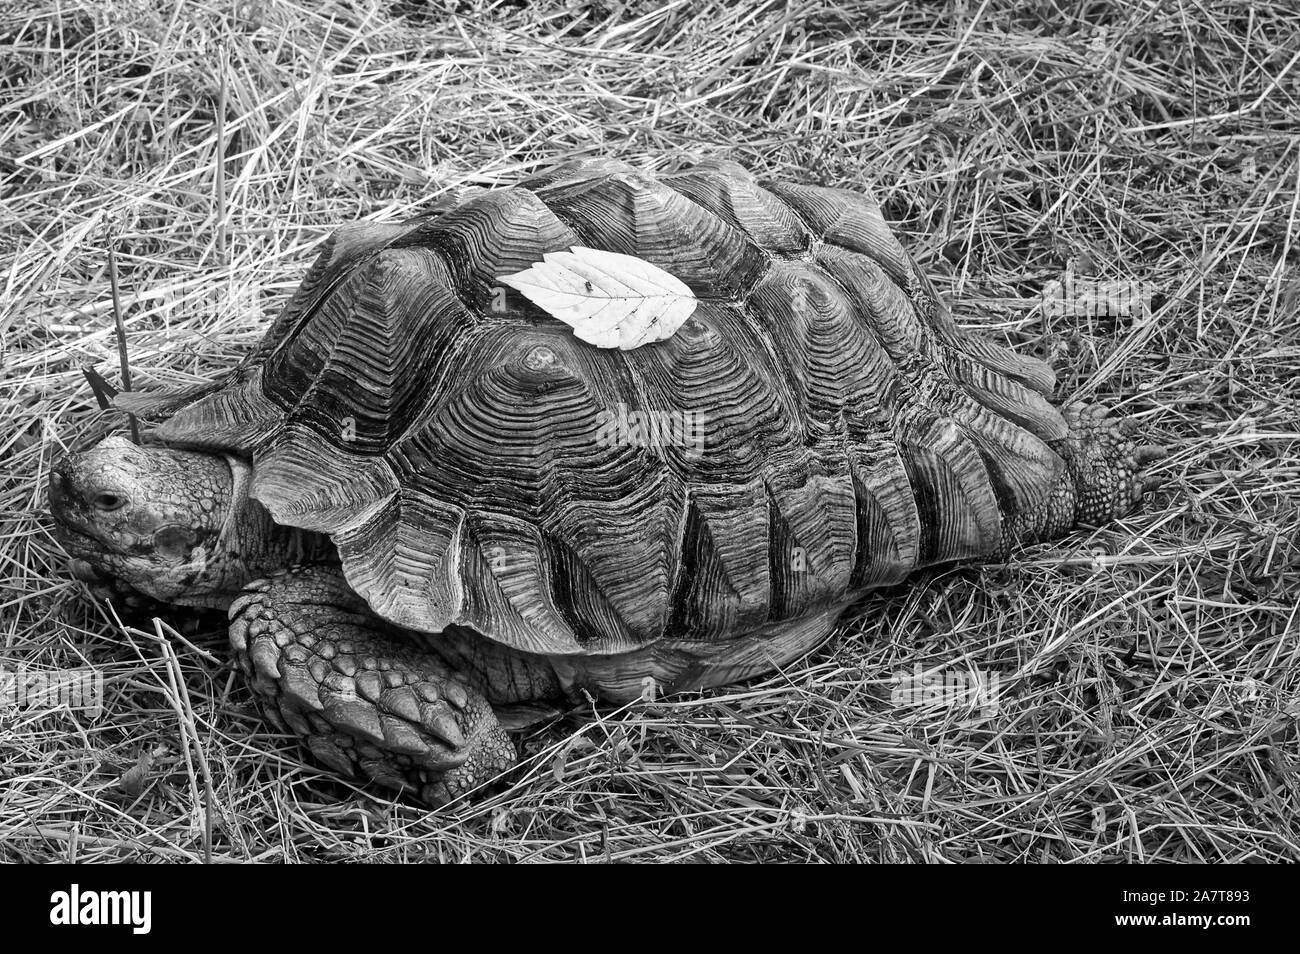 Shporonosnaya turtle (Latin Geochelone sulcata) - kind of tortoises Stock Photo